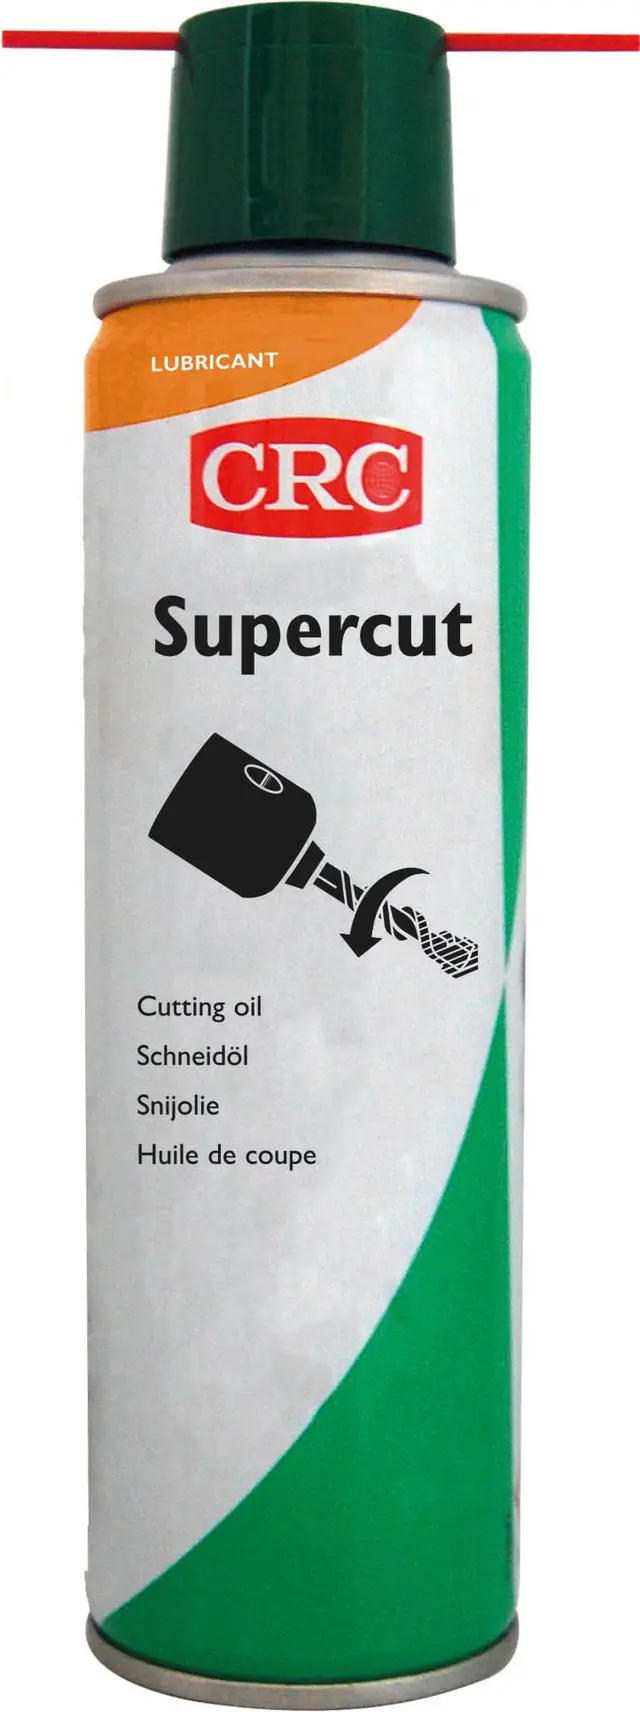 Supercut spray